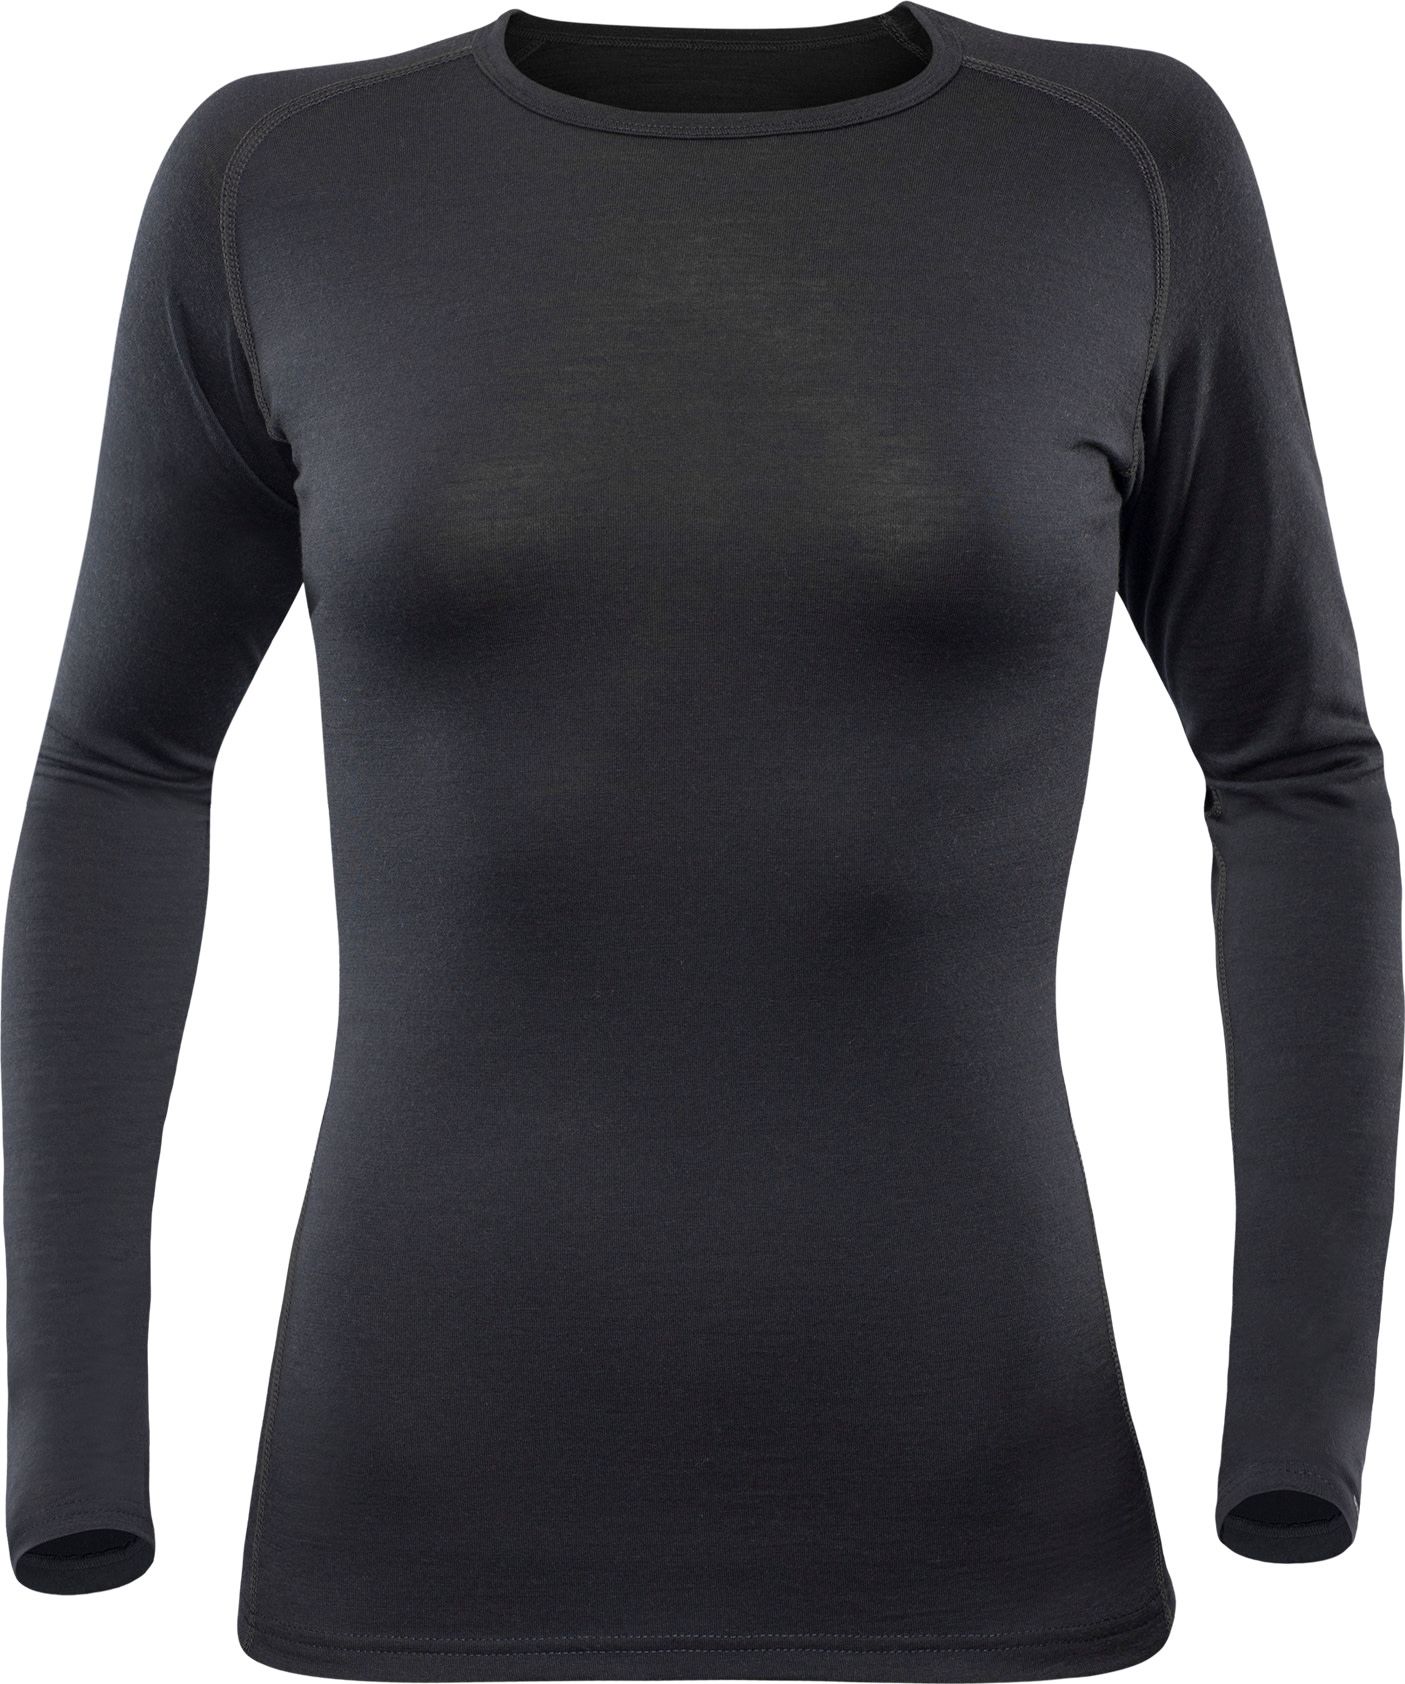 Women's Breeze Shirt Black